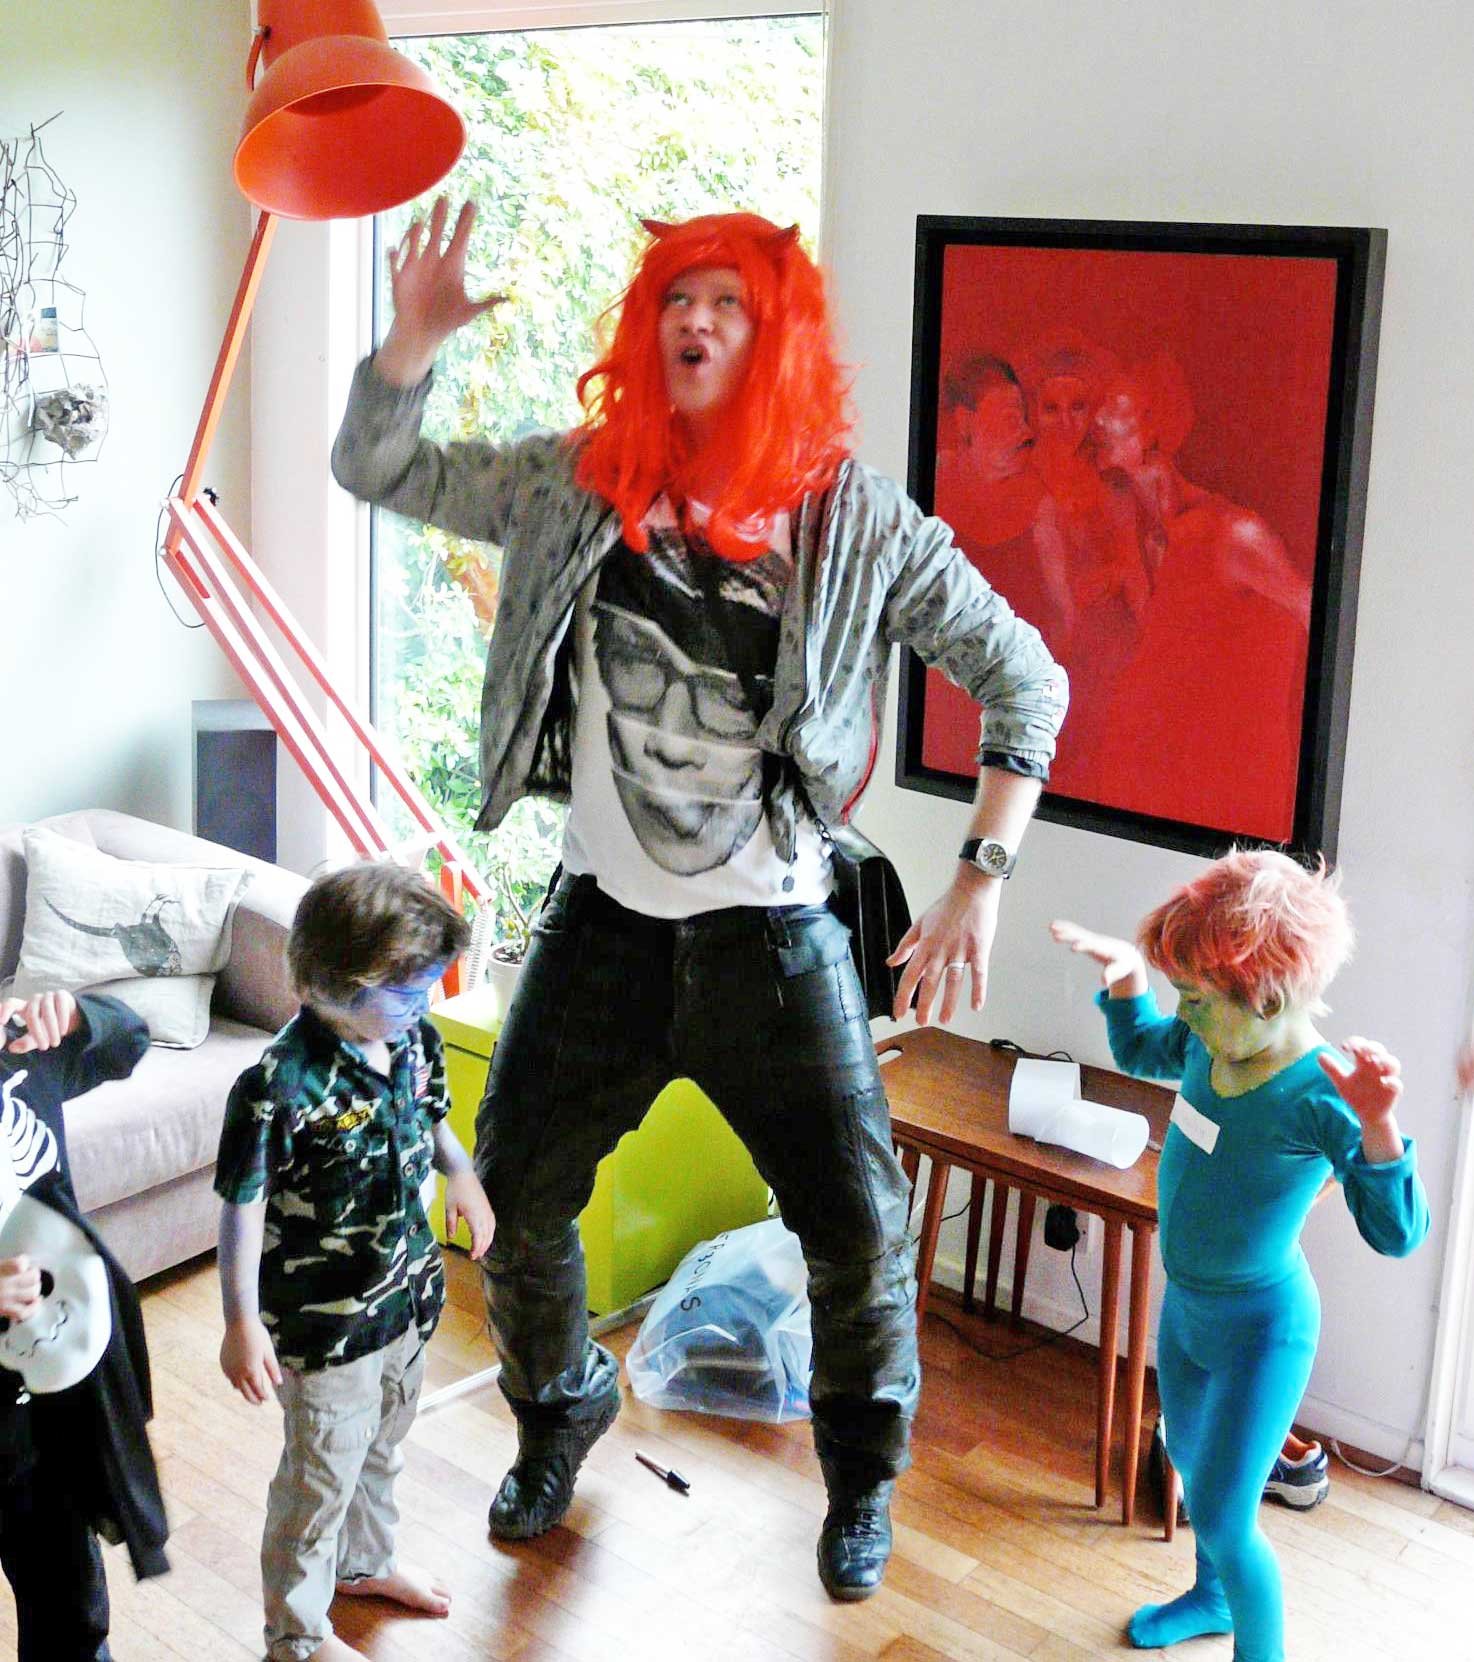 Danzar the Human Monster 'Rock Star' - Adventure Party Themes - Nutty's Children's Parties 7.jpg